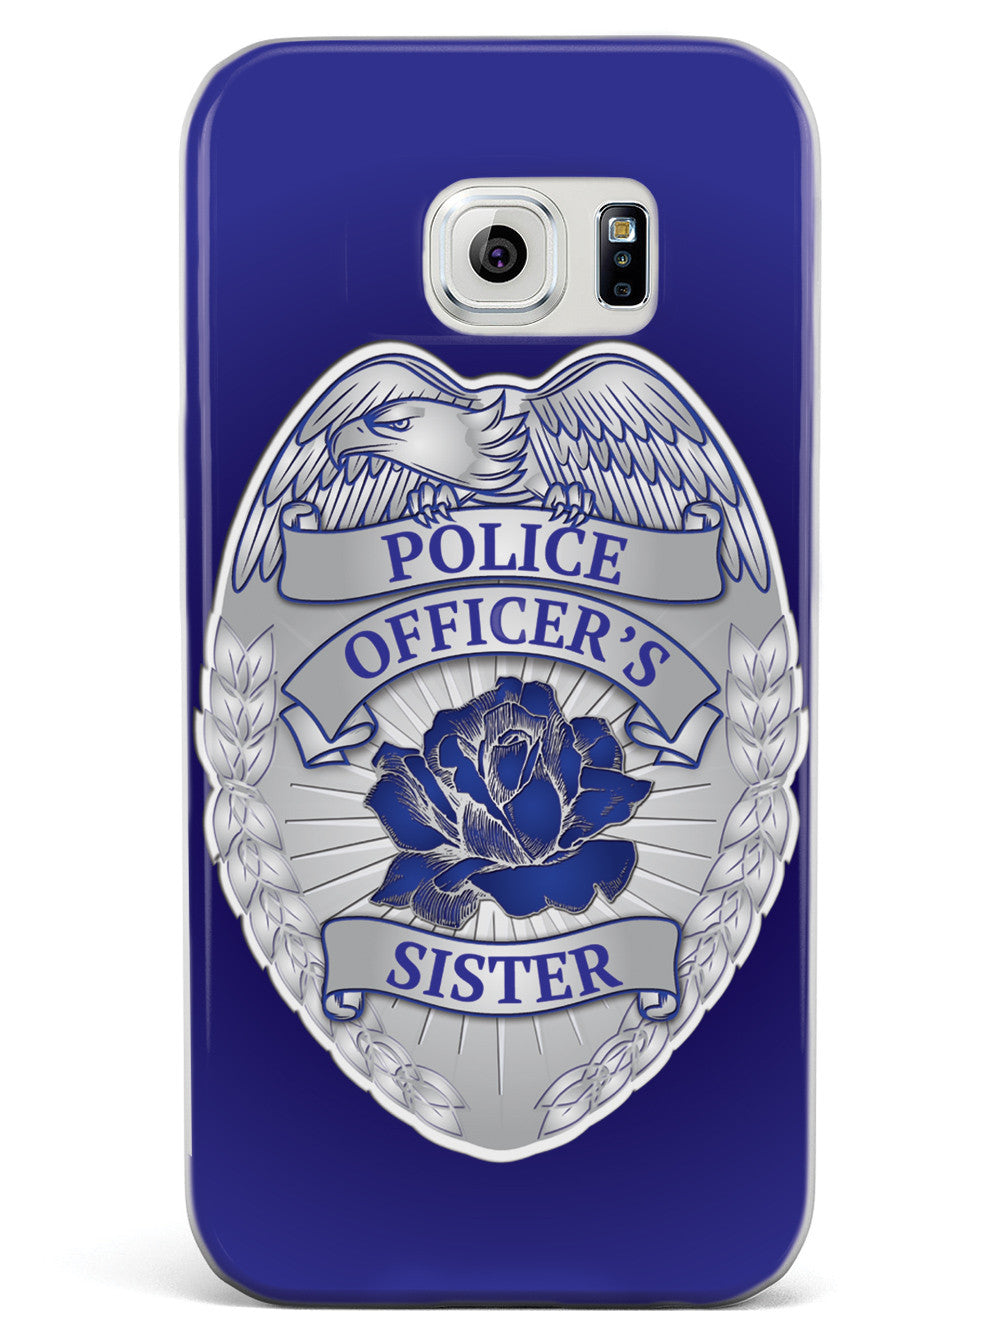 Police Officer's Sister Badge Case